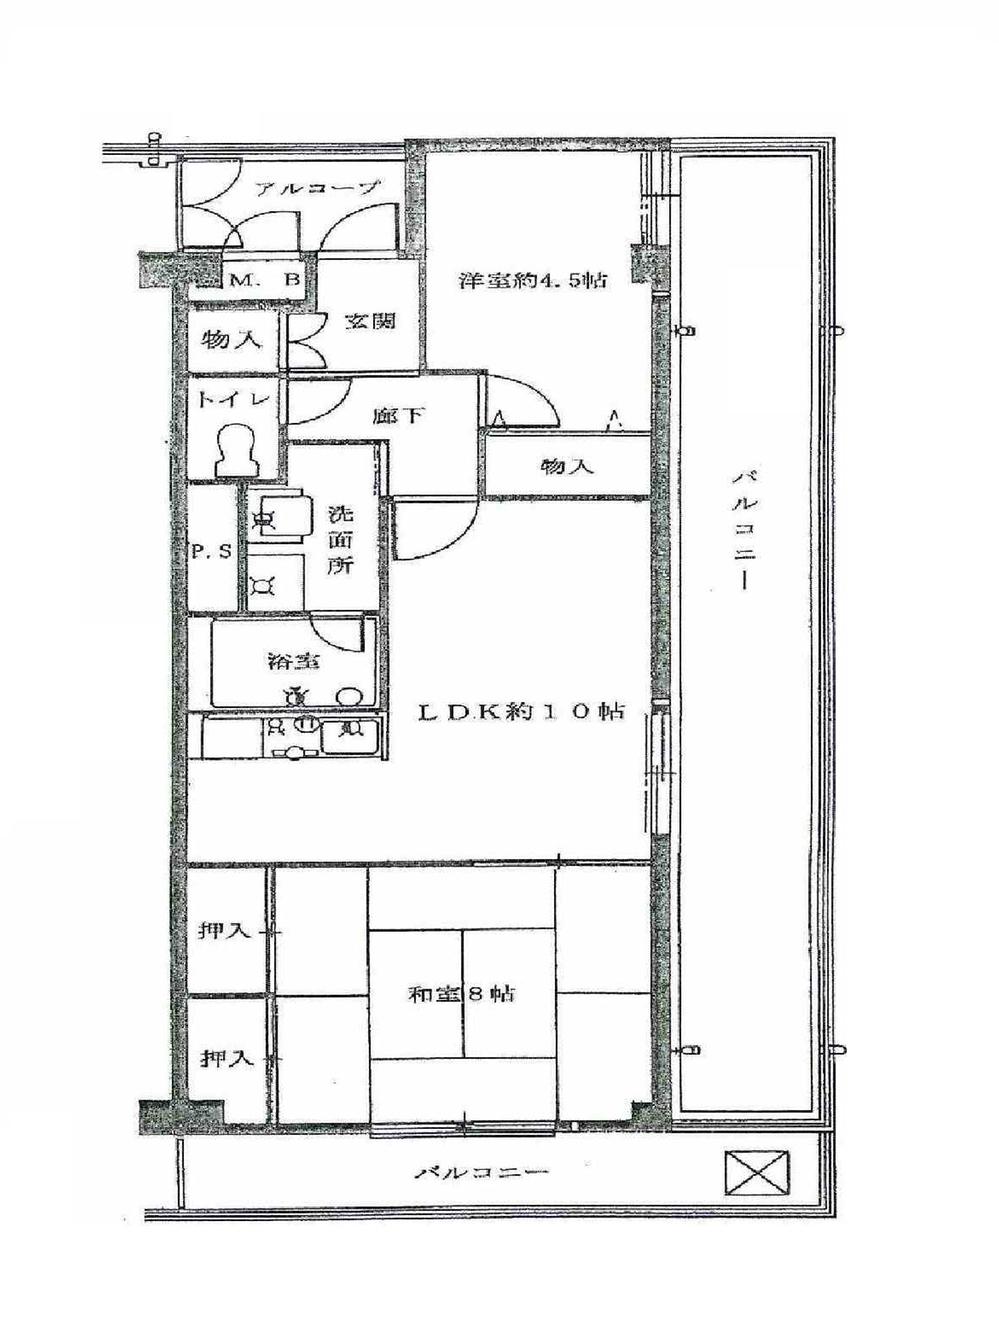 Floor plan. 2LDK, Price 13 million yen, Footprint 60 sq m , Balcony area 26.22 sq m southeast corner room Day is good.